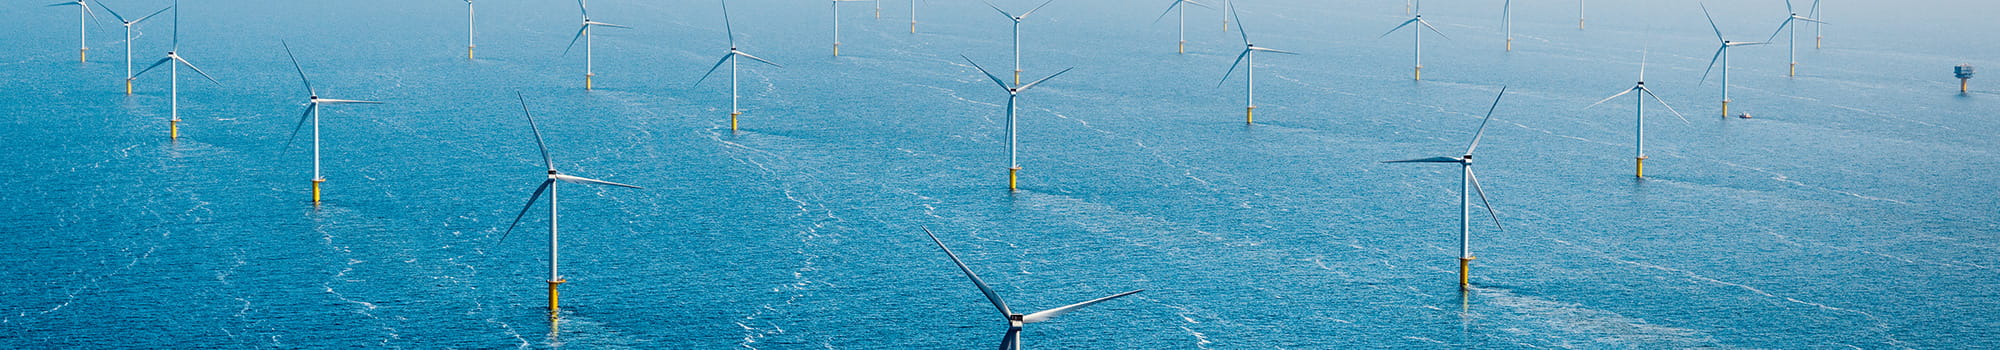 Around twenty wind turbines standing in the sea